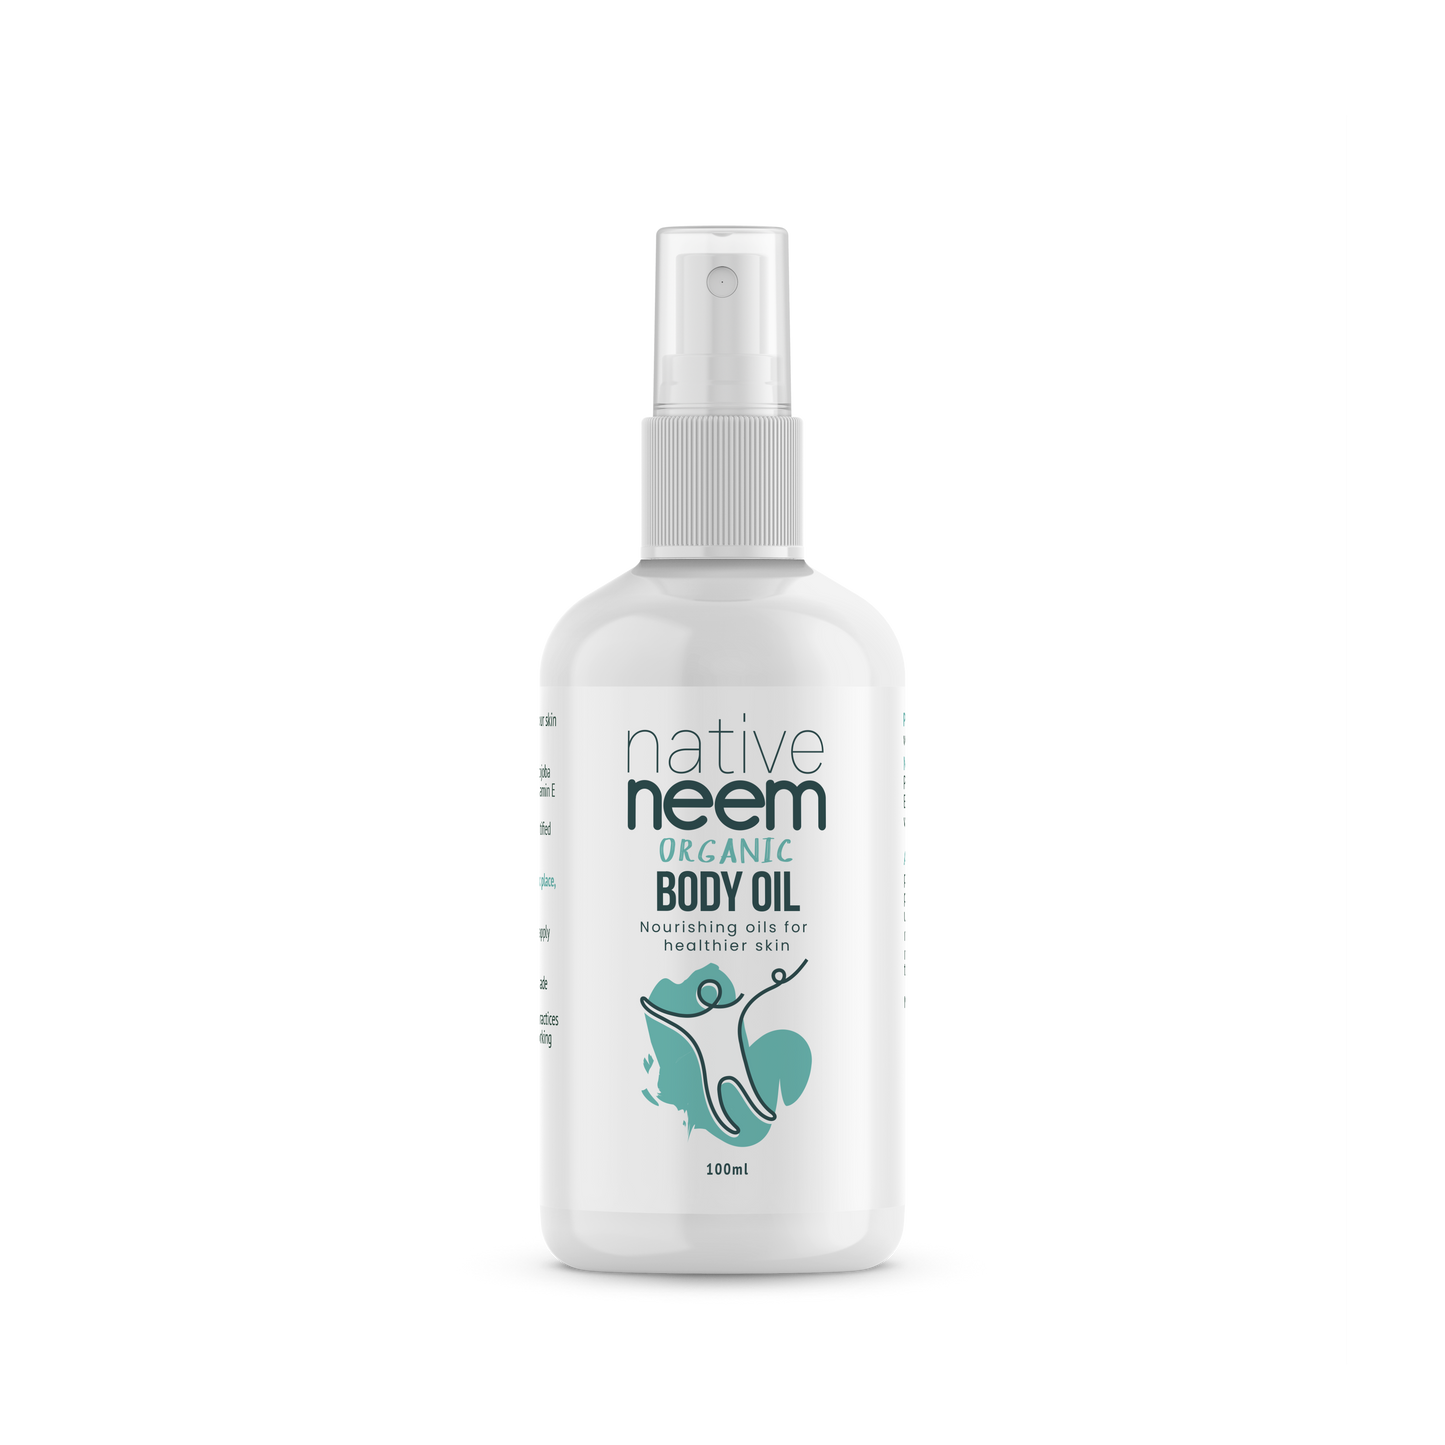 Organic Neem Body Oil 100ml - NativeNeem